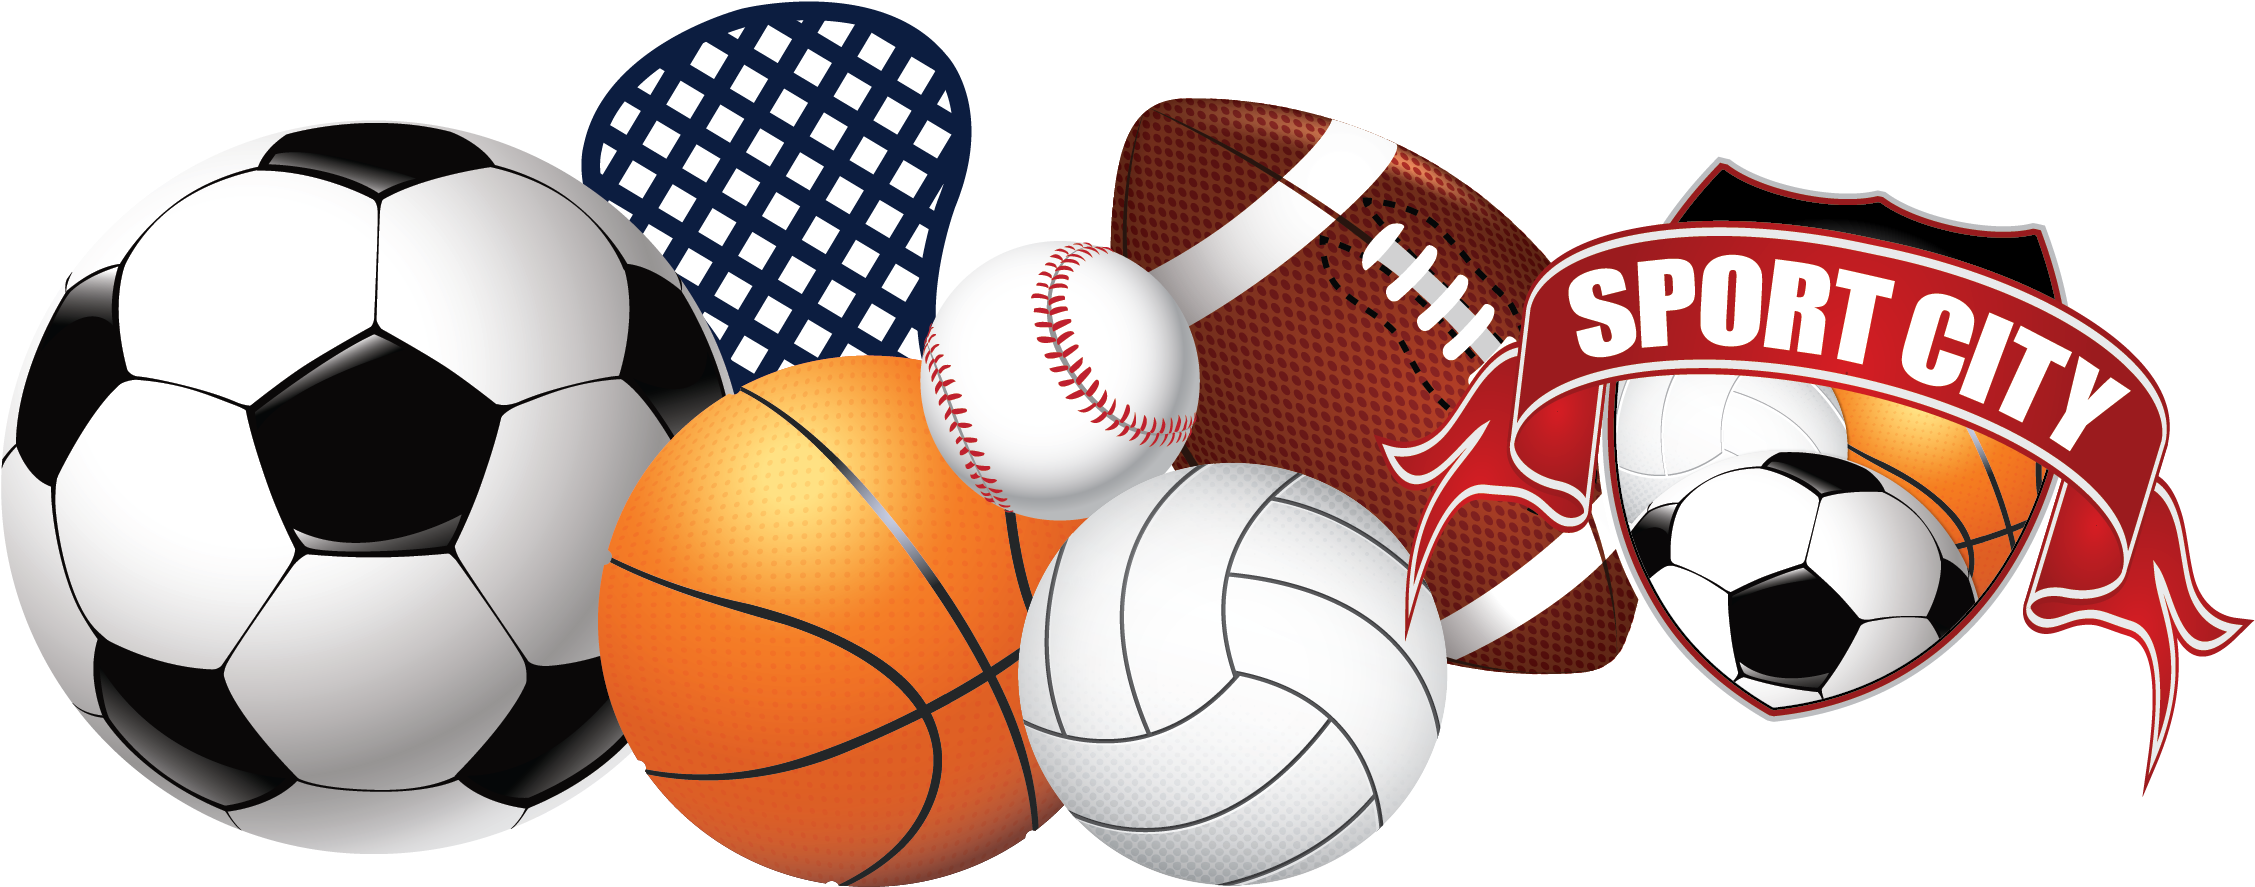 Kids Summer Sports Camps - Play Voleyball Basketball Soccer (2400x965)